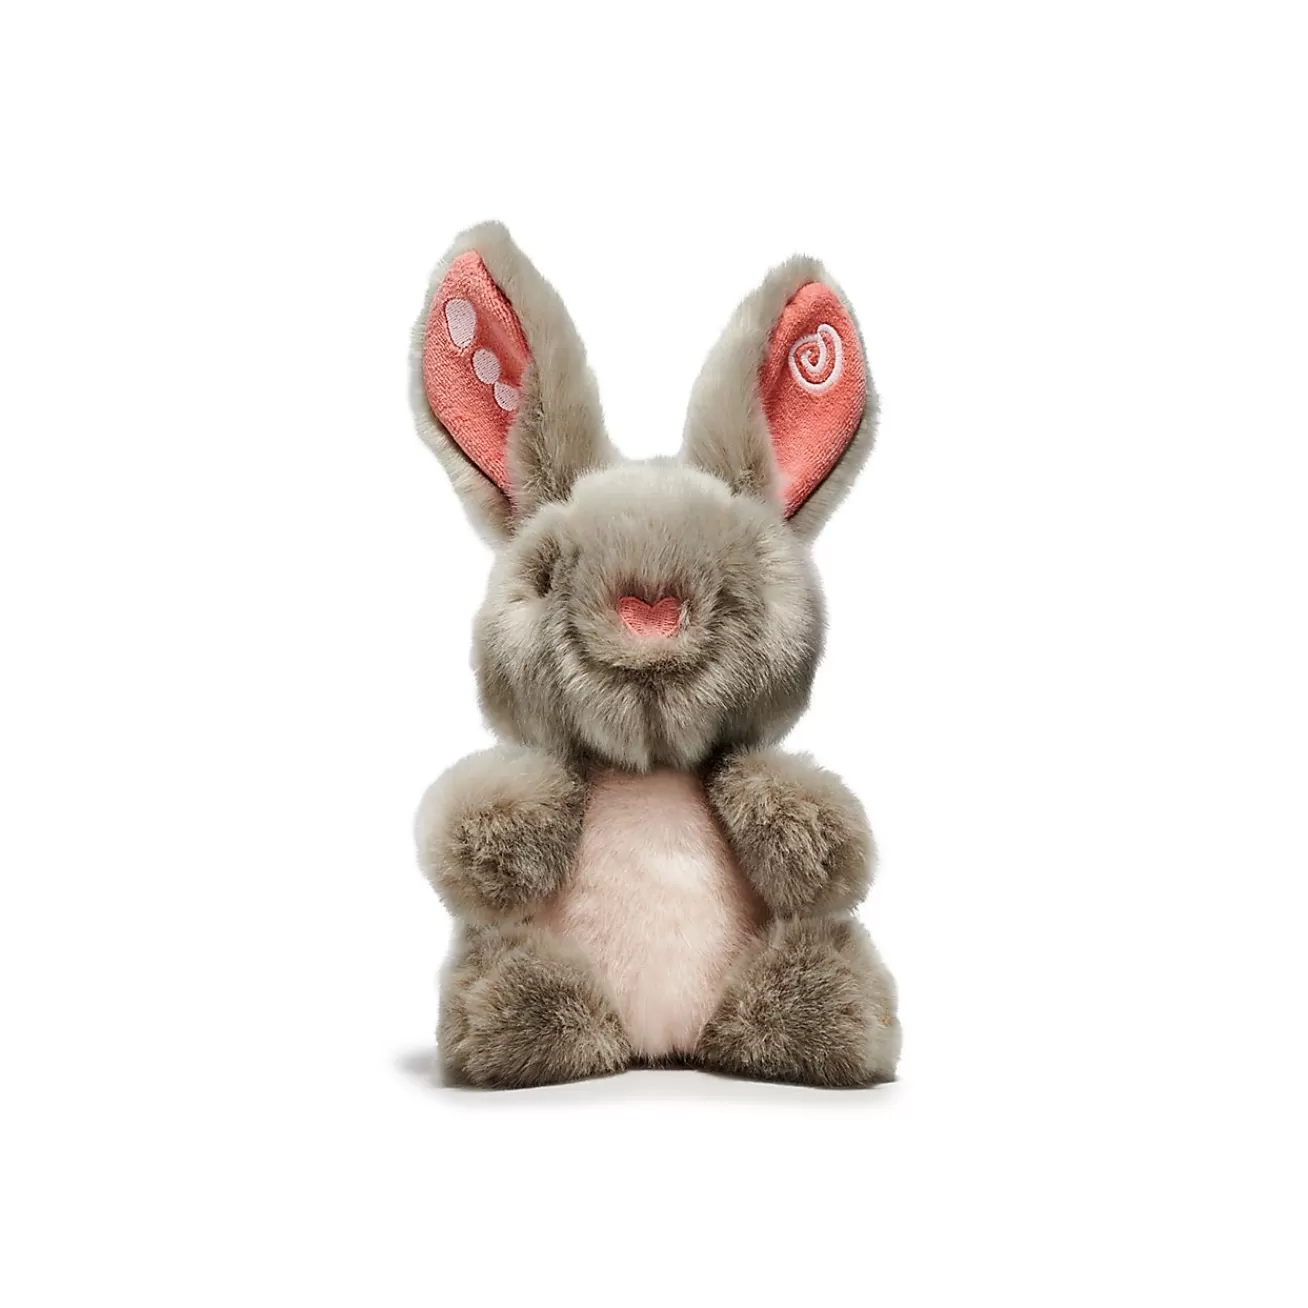 Tiffany & Co. Tiny Tiffany Hopper the Rabbit Plush Toy in a Cotton Blend | ^ Baby | Baby